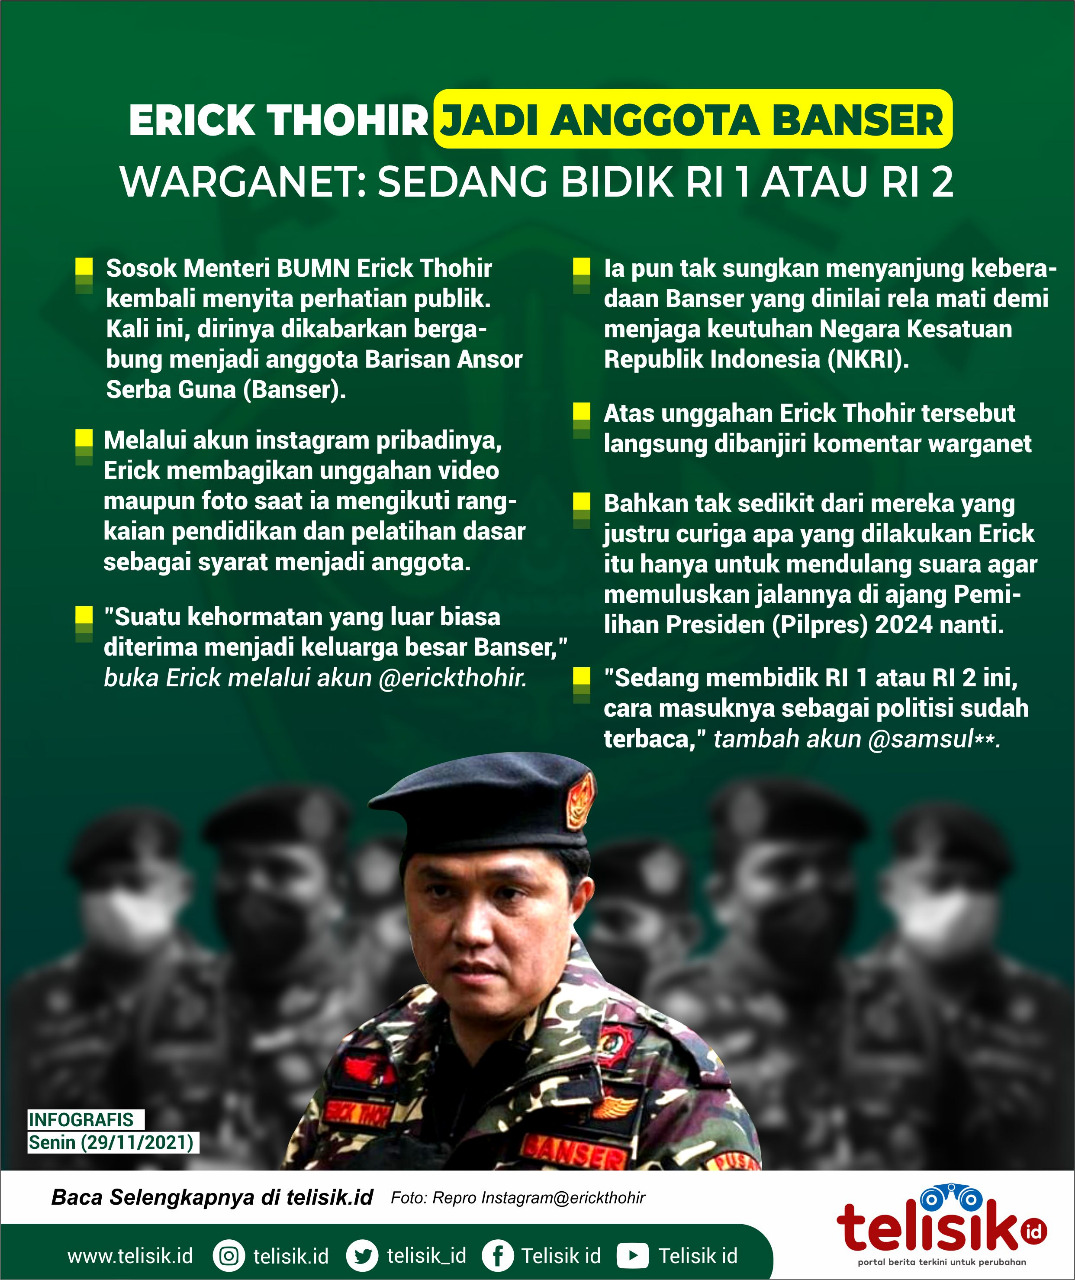 Infografis: Erick Thohir Jadi Anggota Banser, Warganet: Sedang Bidik RI 1 atau RI 2